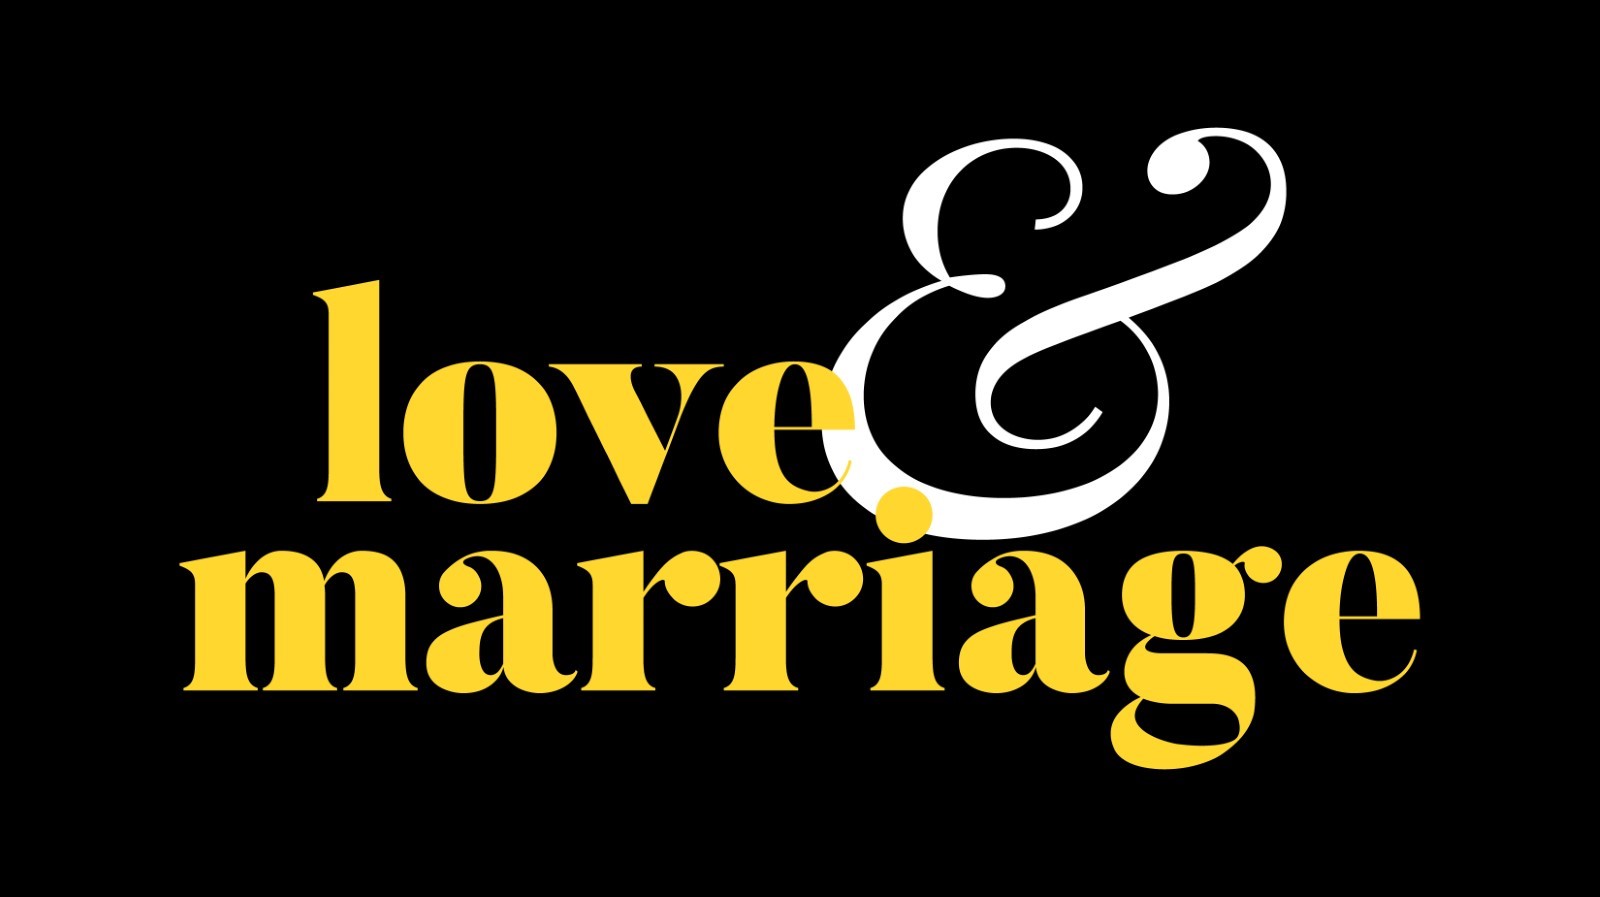 Download Logo Weds Wedding PNG Image High Quality HQ PNG Image | FreePNGImg